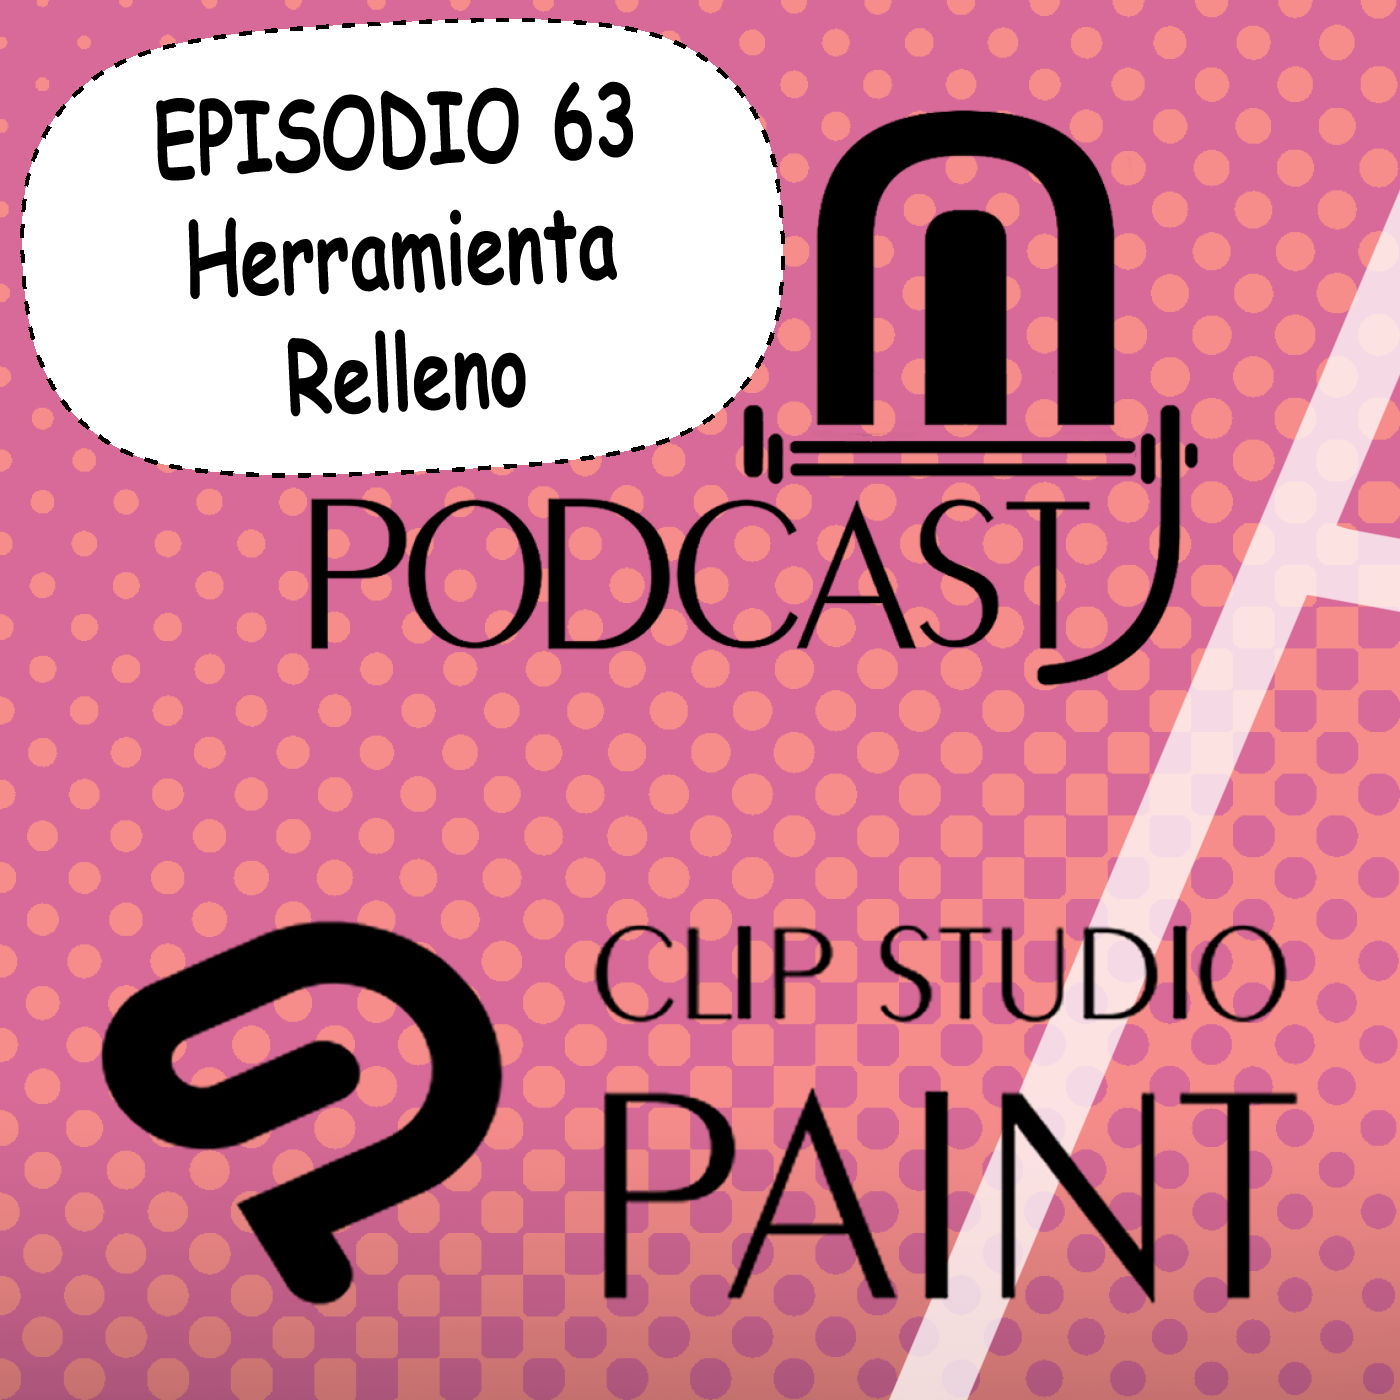 CSP episodio 63. Herramienta Relleno en Clip Studio Paint